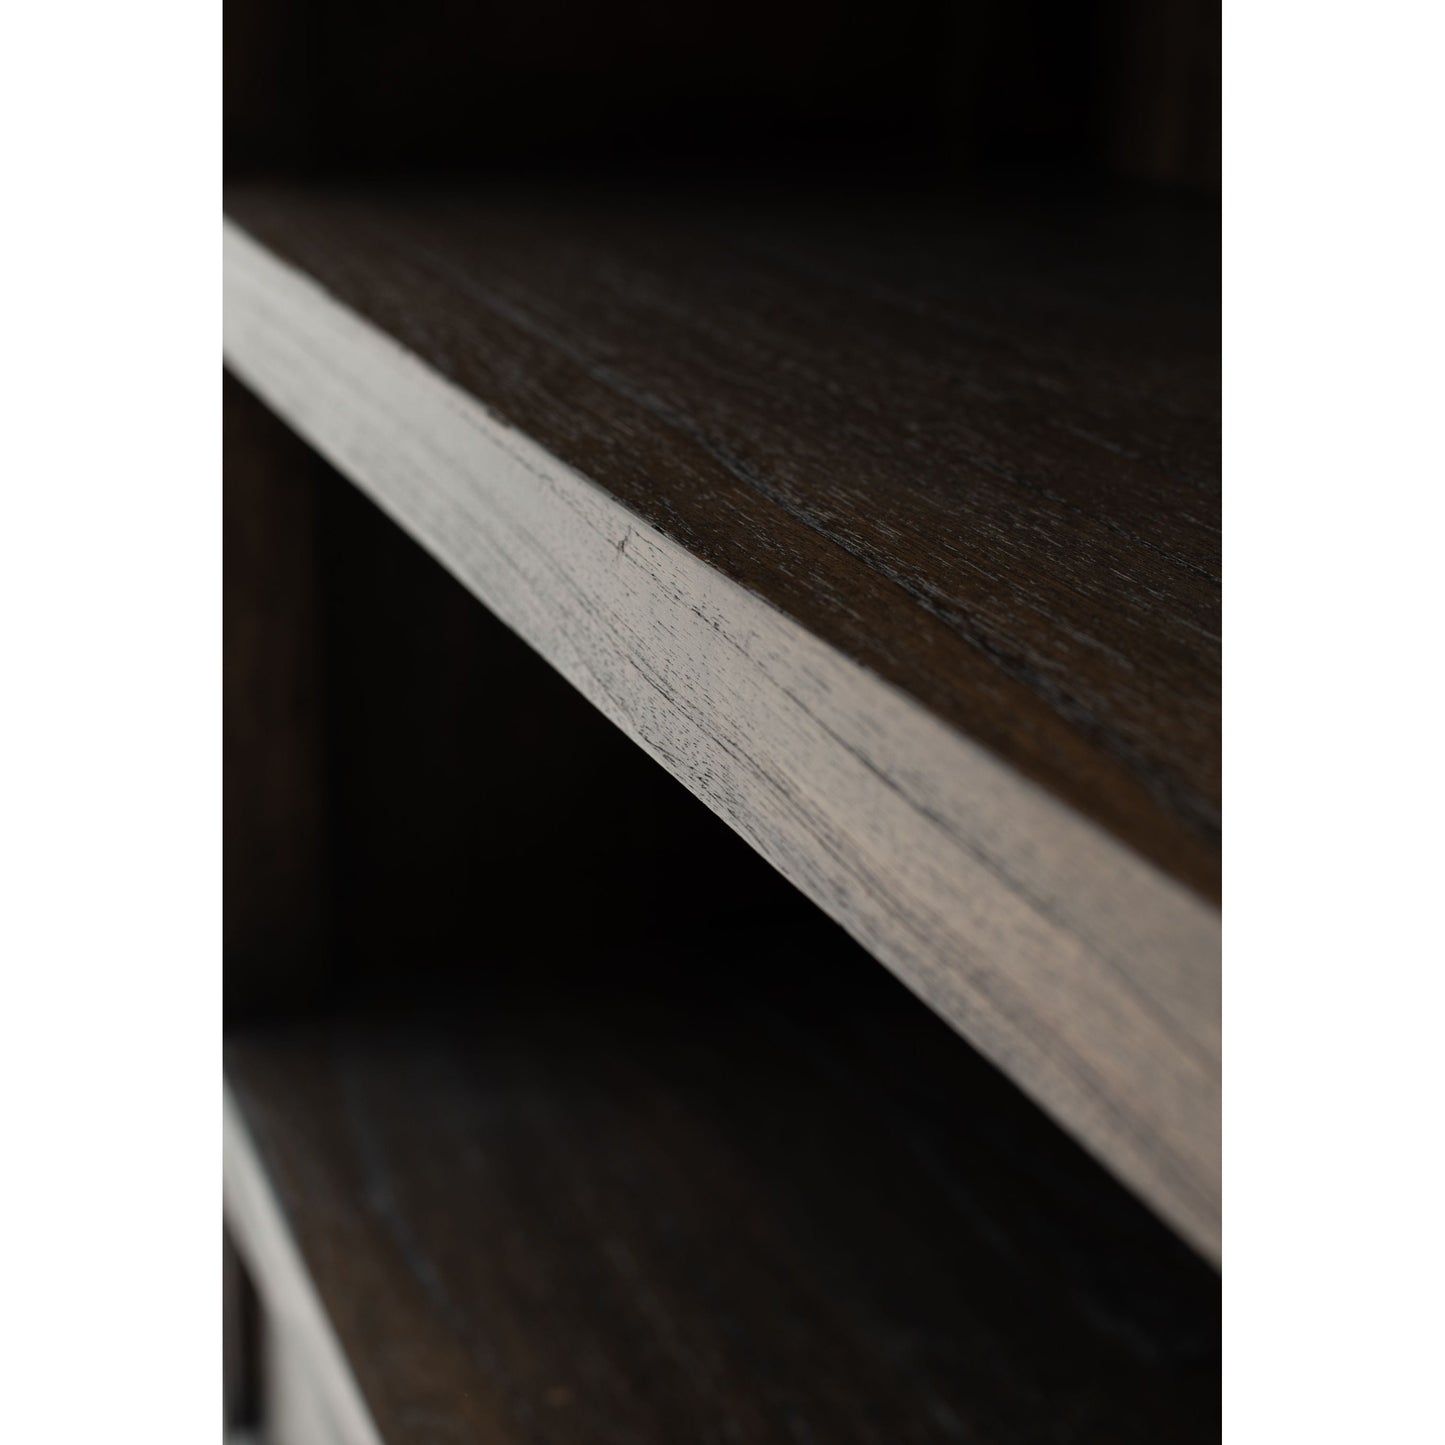 NovaSolo Halifax Mindi 39" Black Mindi Wood Book Cabinet With 3 Large Drawers